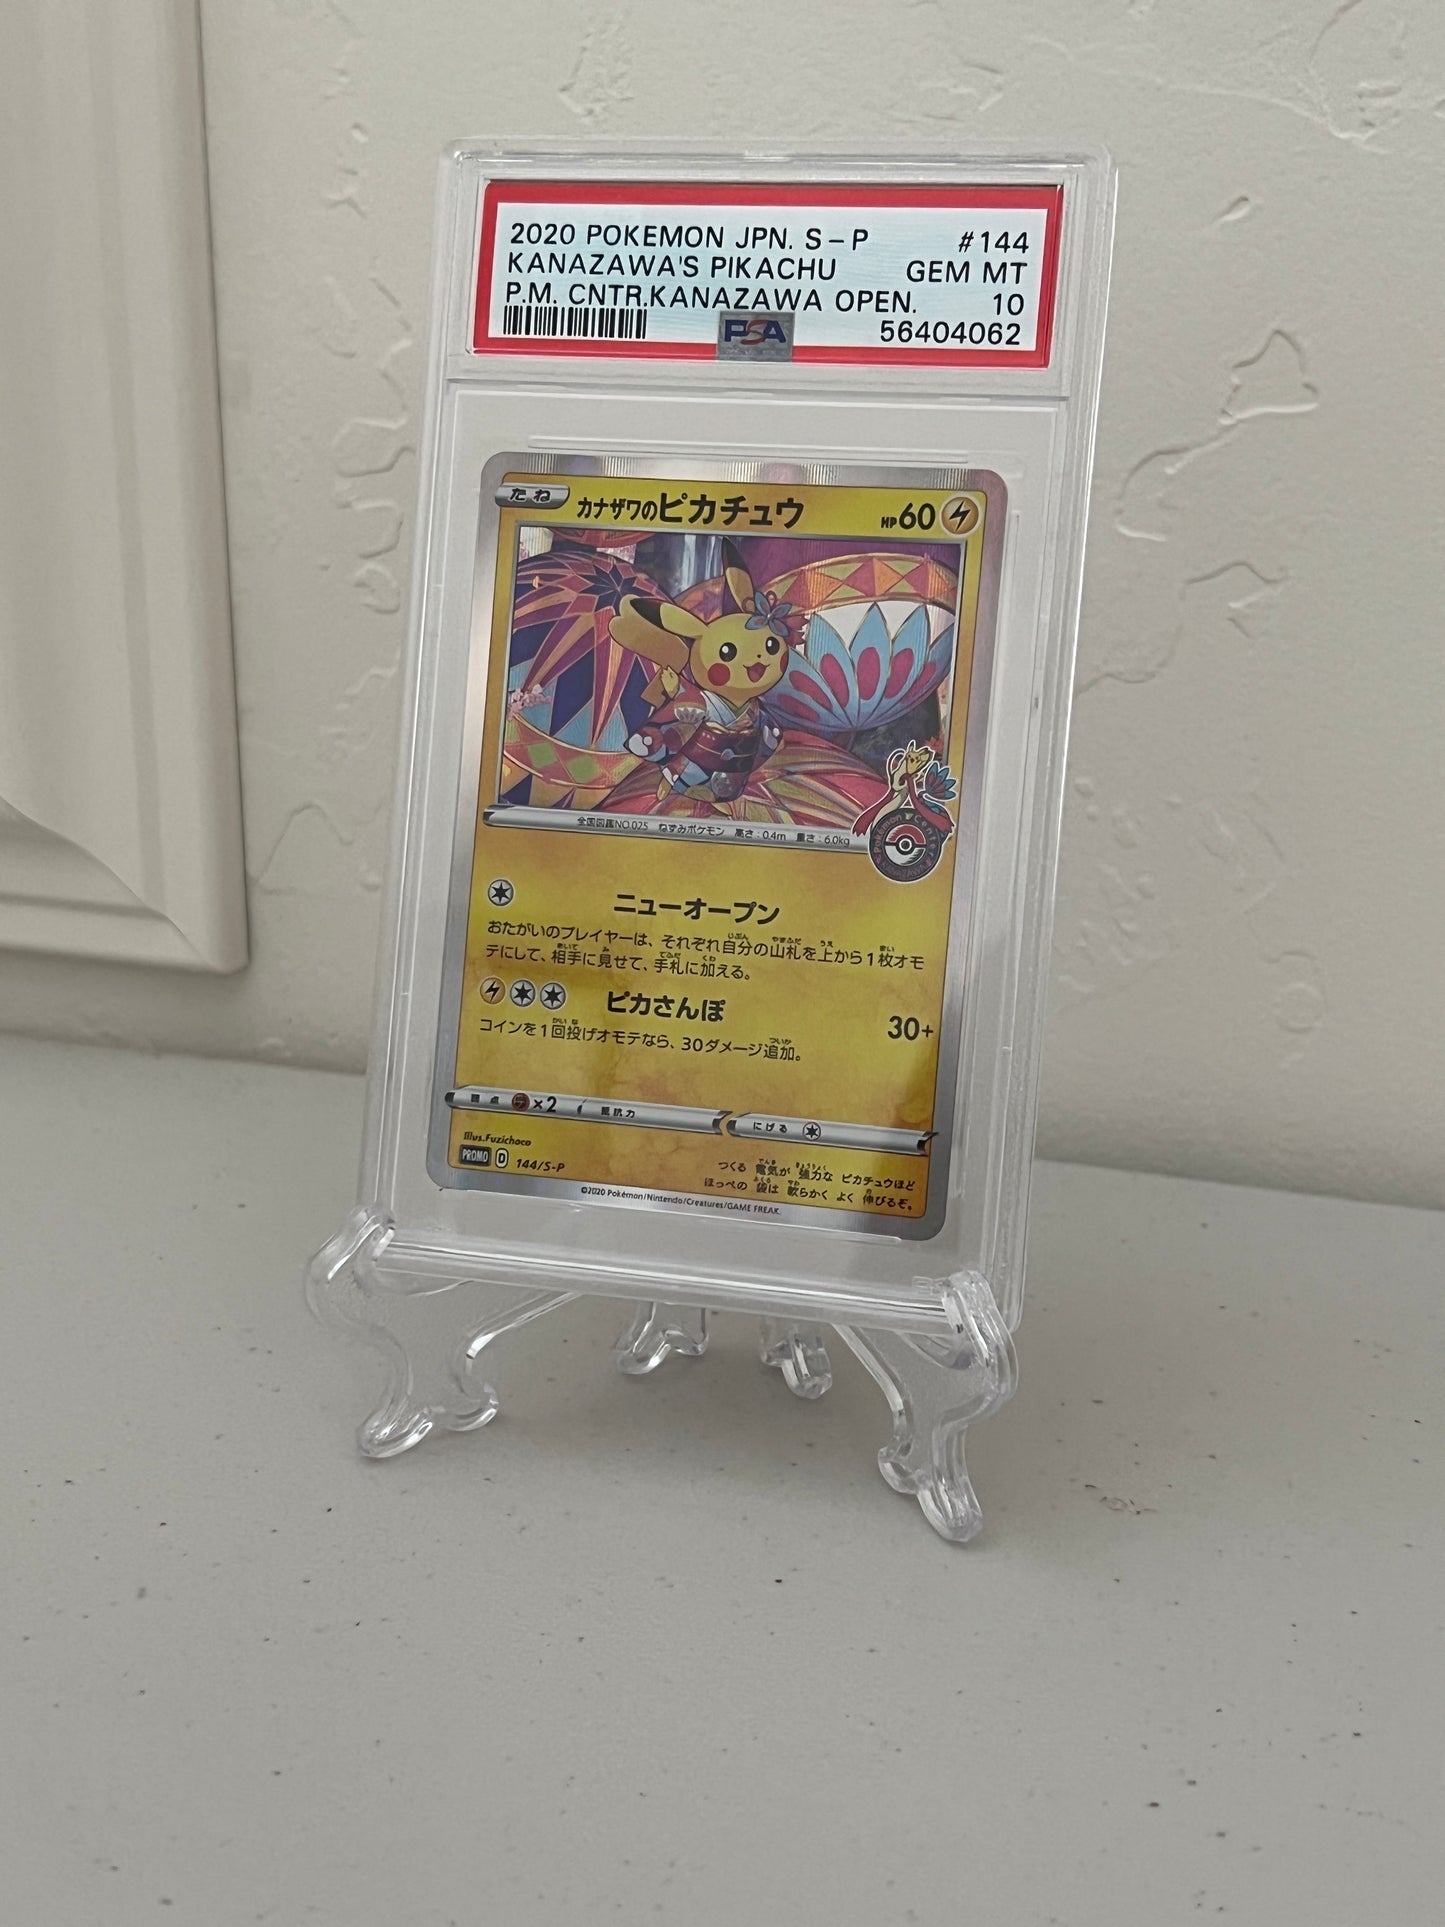 2020 Pokemon Center Japan Kanazawa's Pikachu 144/S-P PSA 10